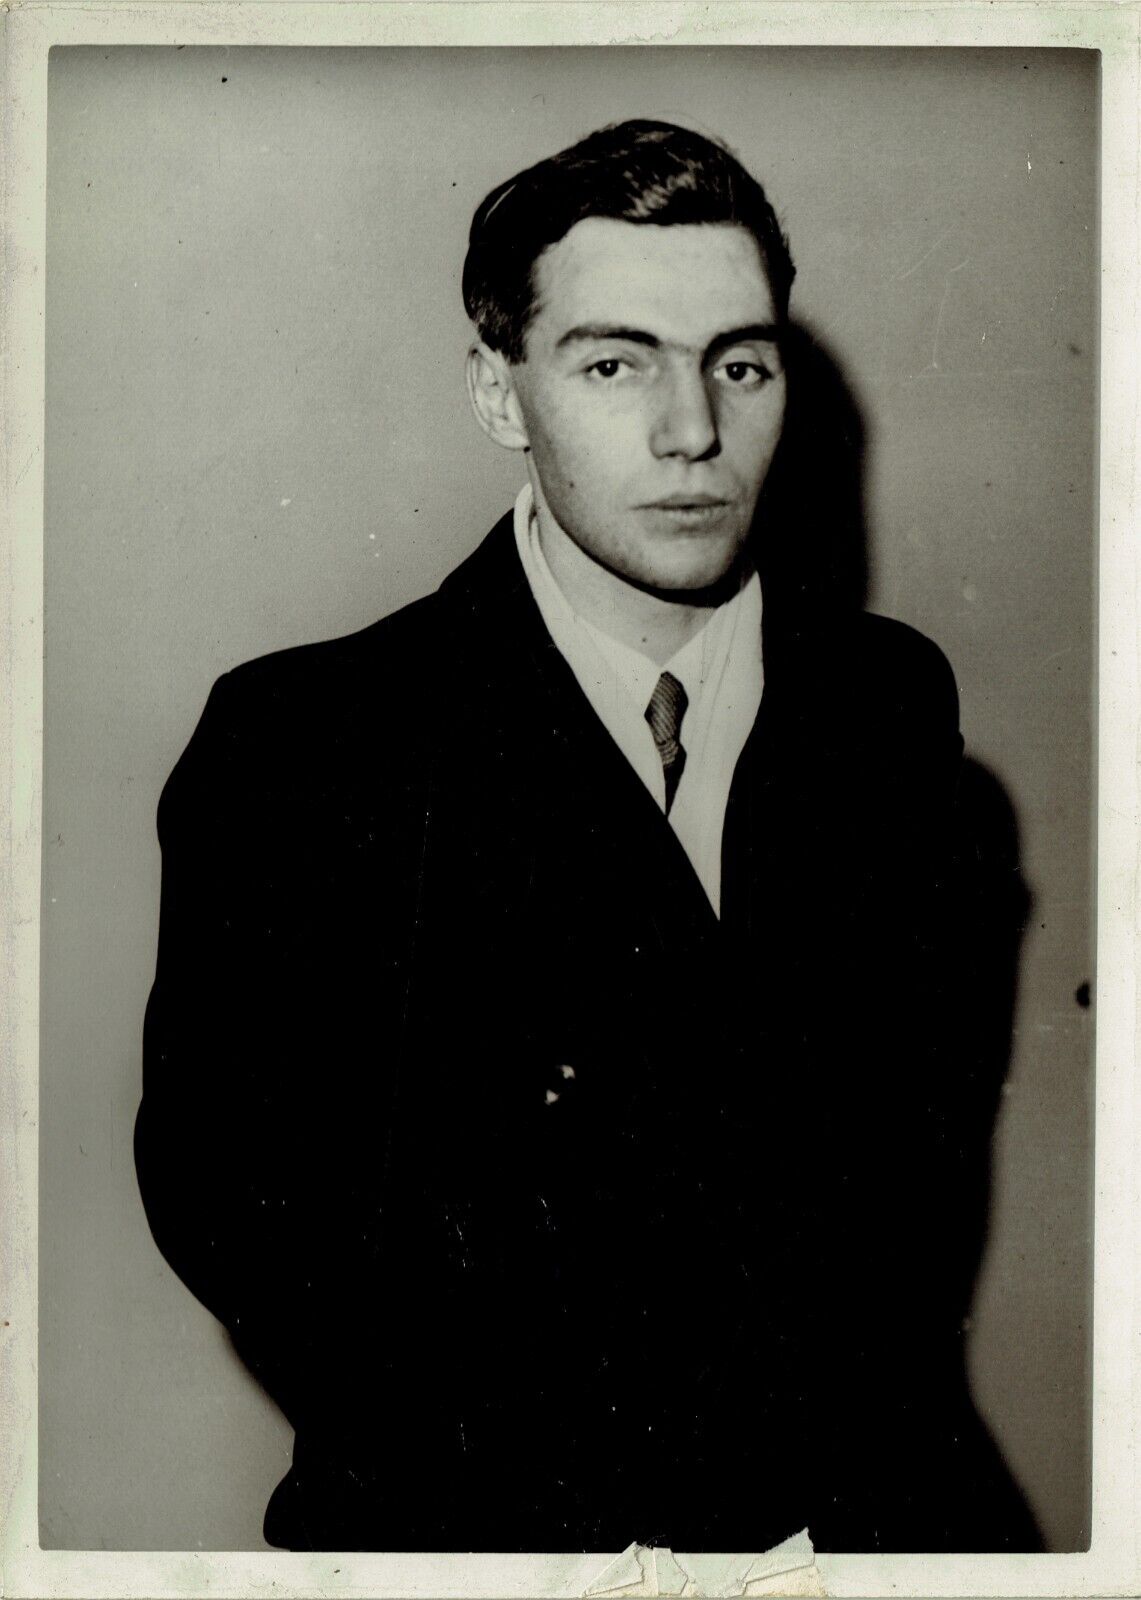 MURDER PRESS PHOTO CA 1934 Robert FRANCIS winner of the FEMINA prize in 1934